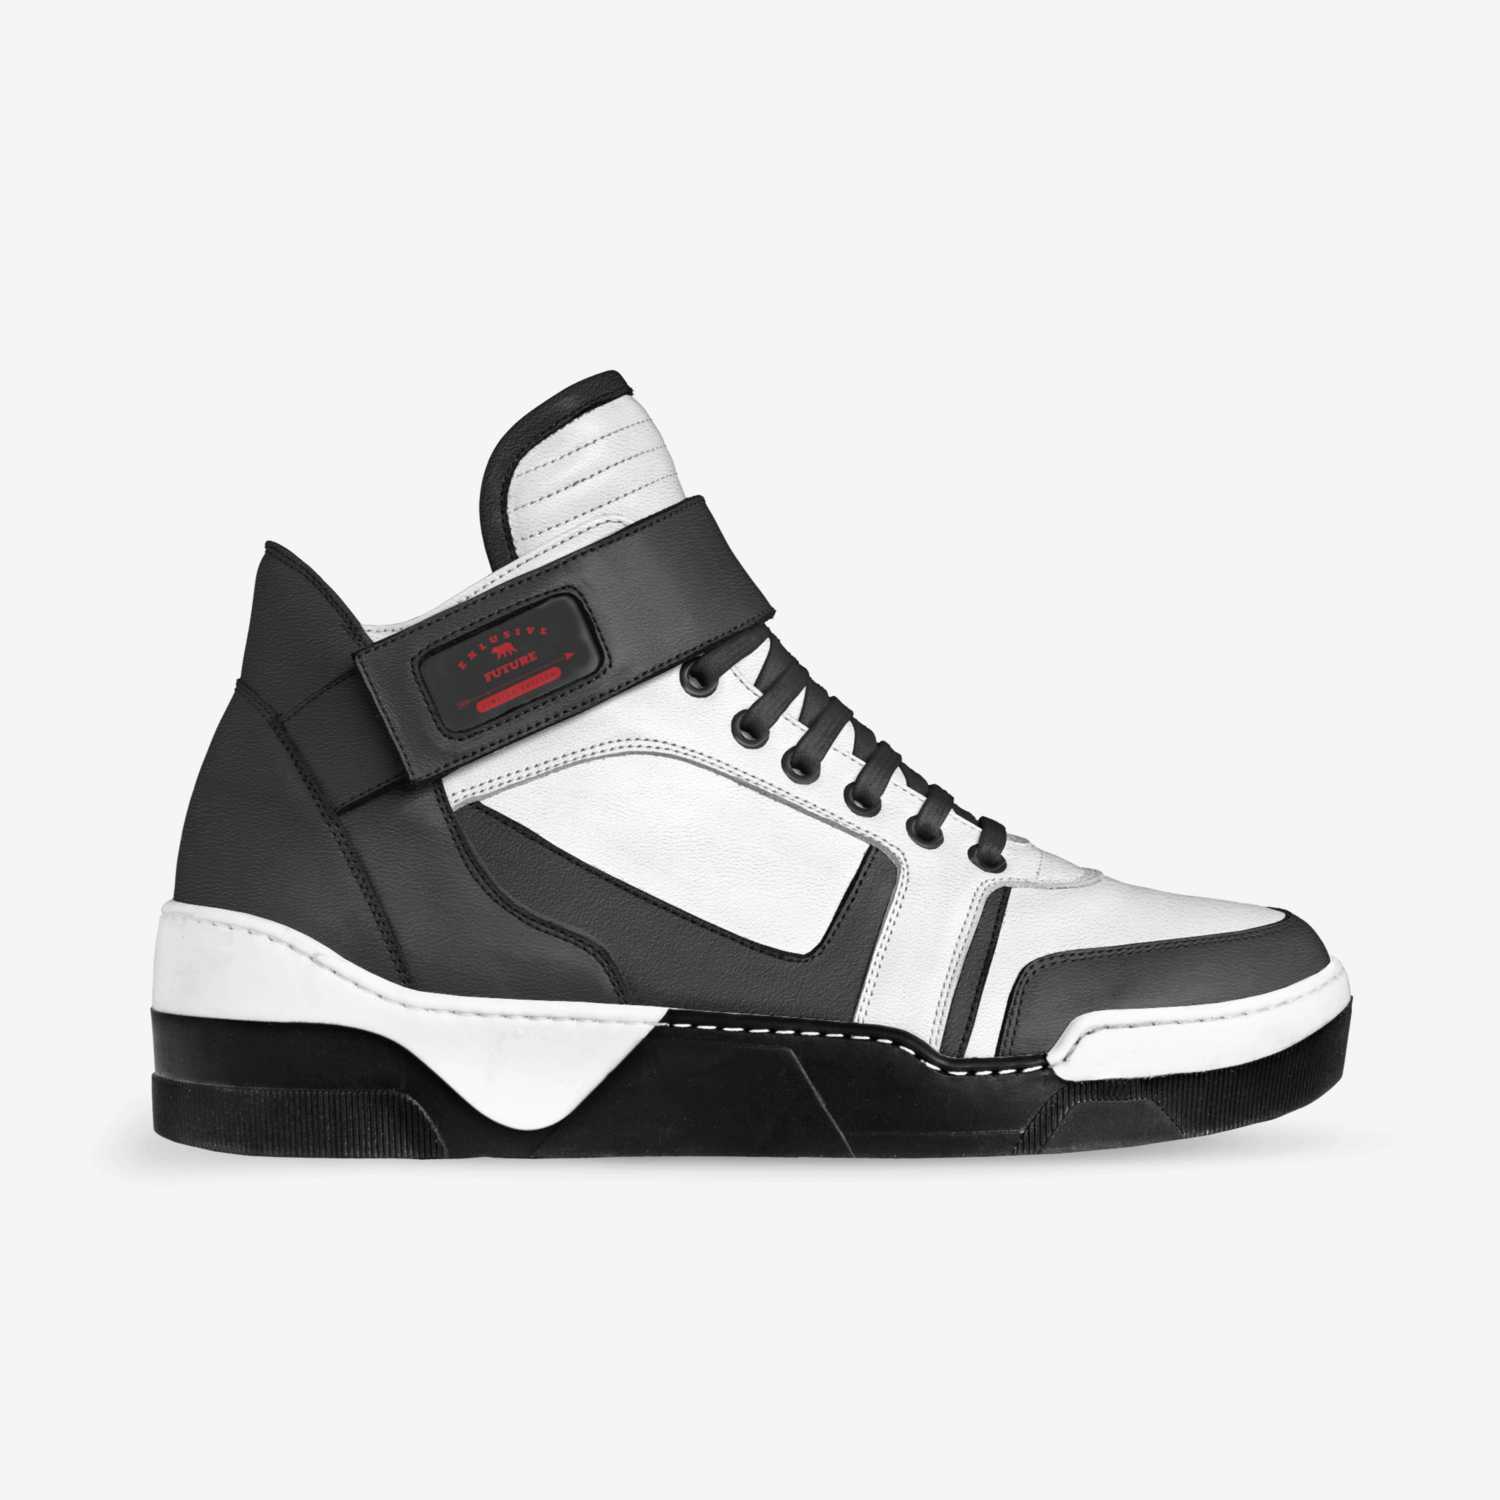 future | A Custom Shoe concept by Lil Uzi Vert